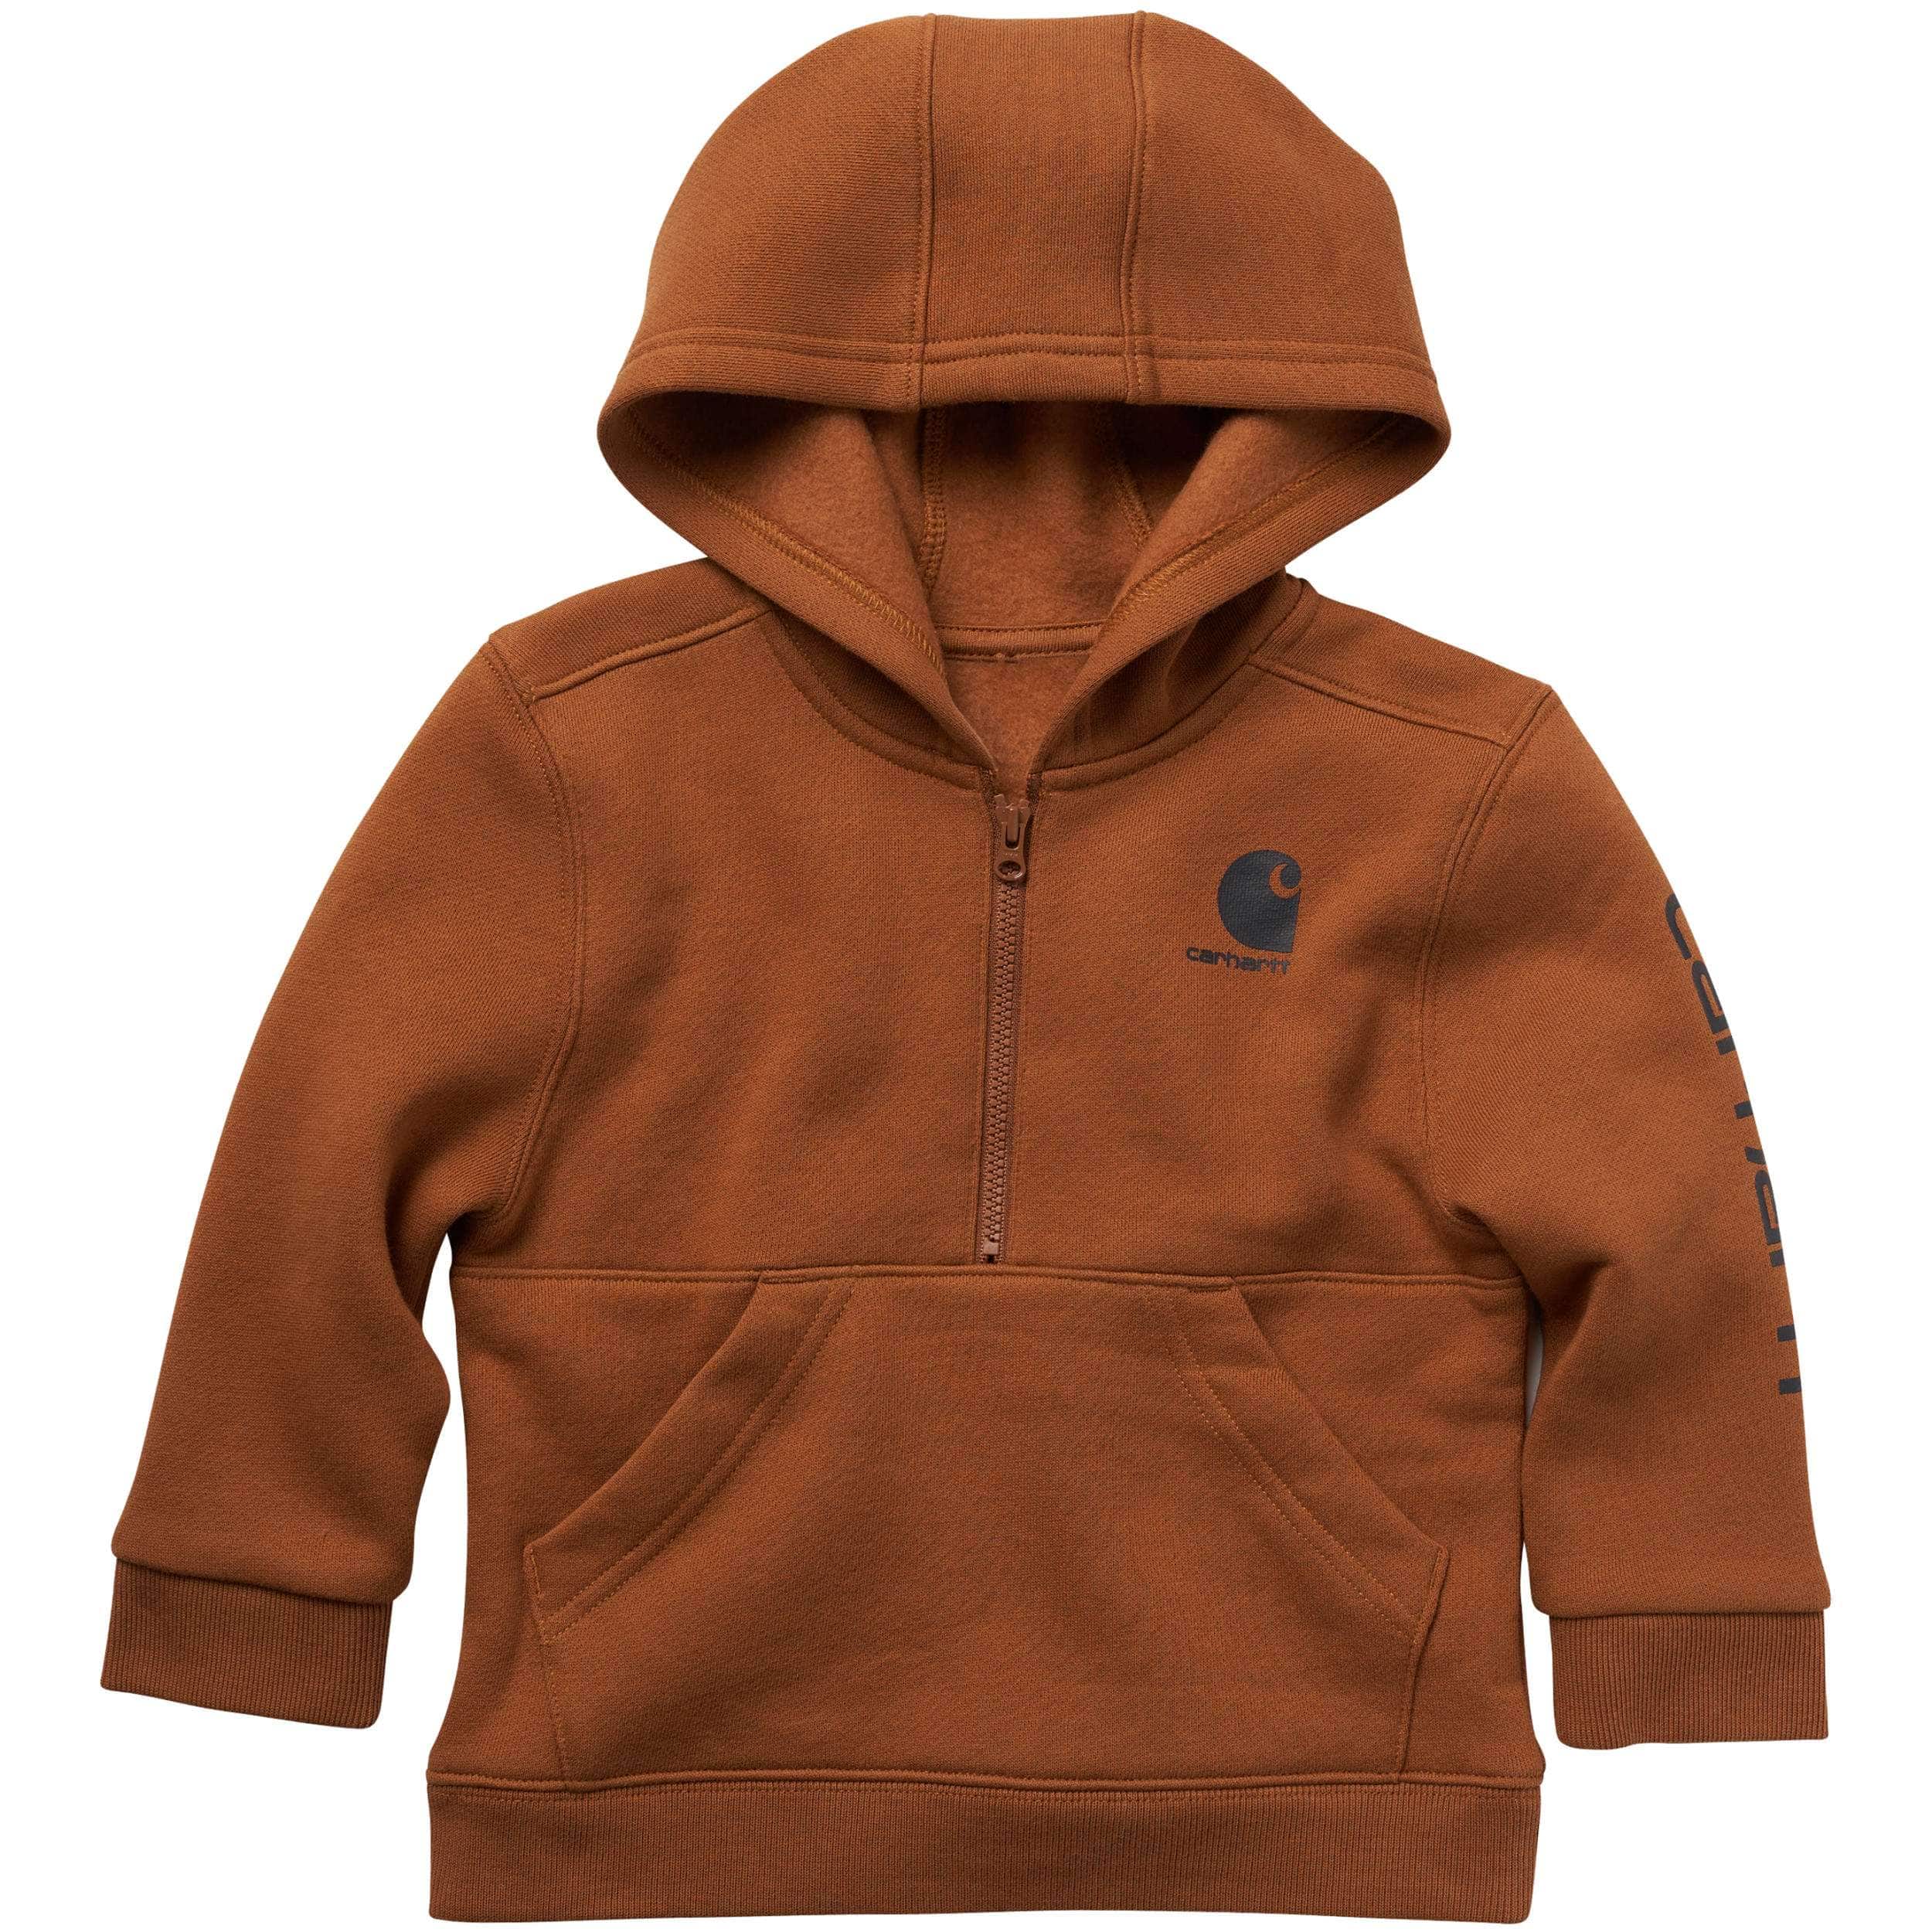 Boys' Long-Sleeve Half-Zip Sweatshirt (Infant/Toddler)